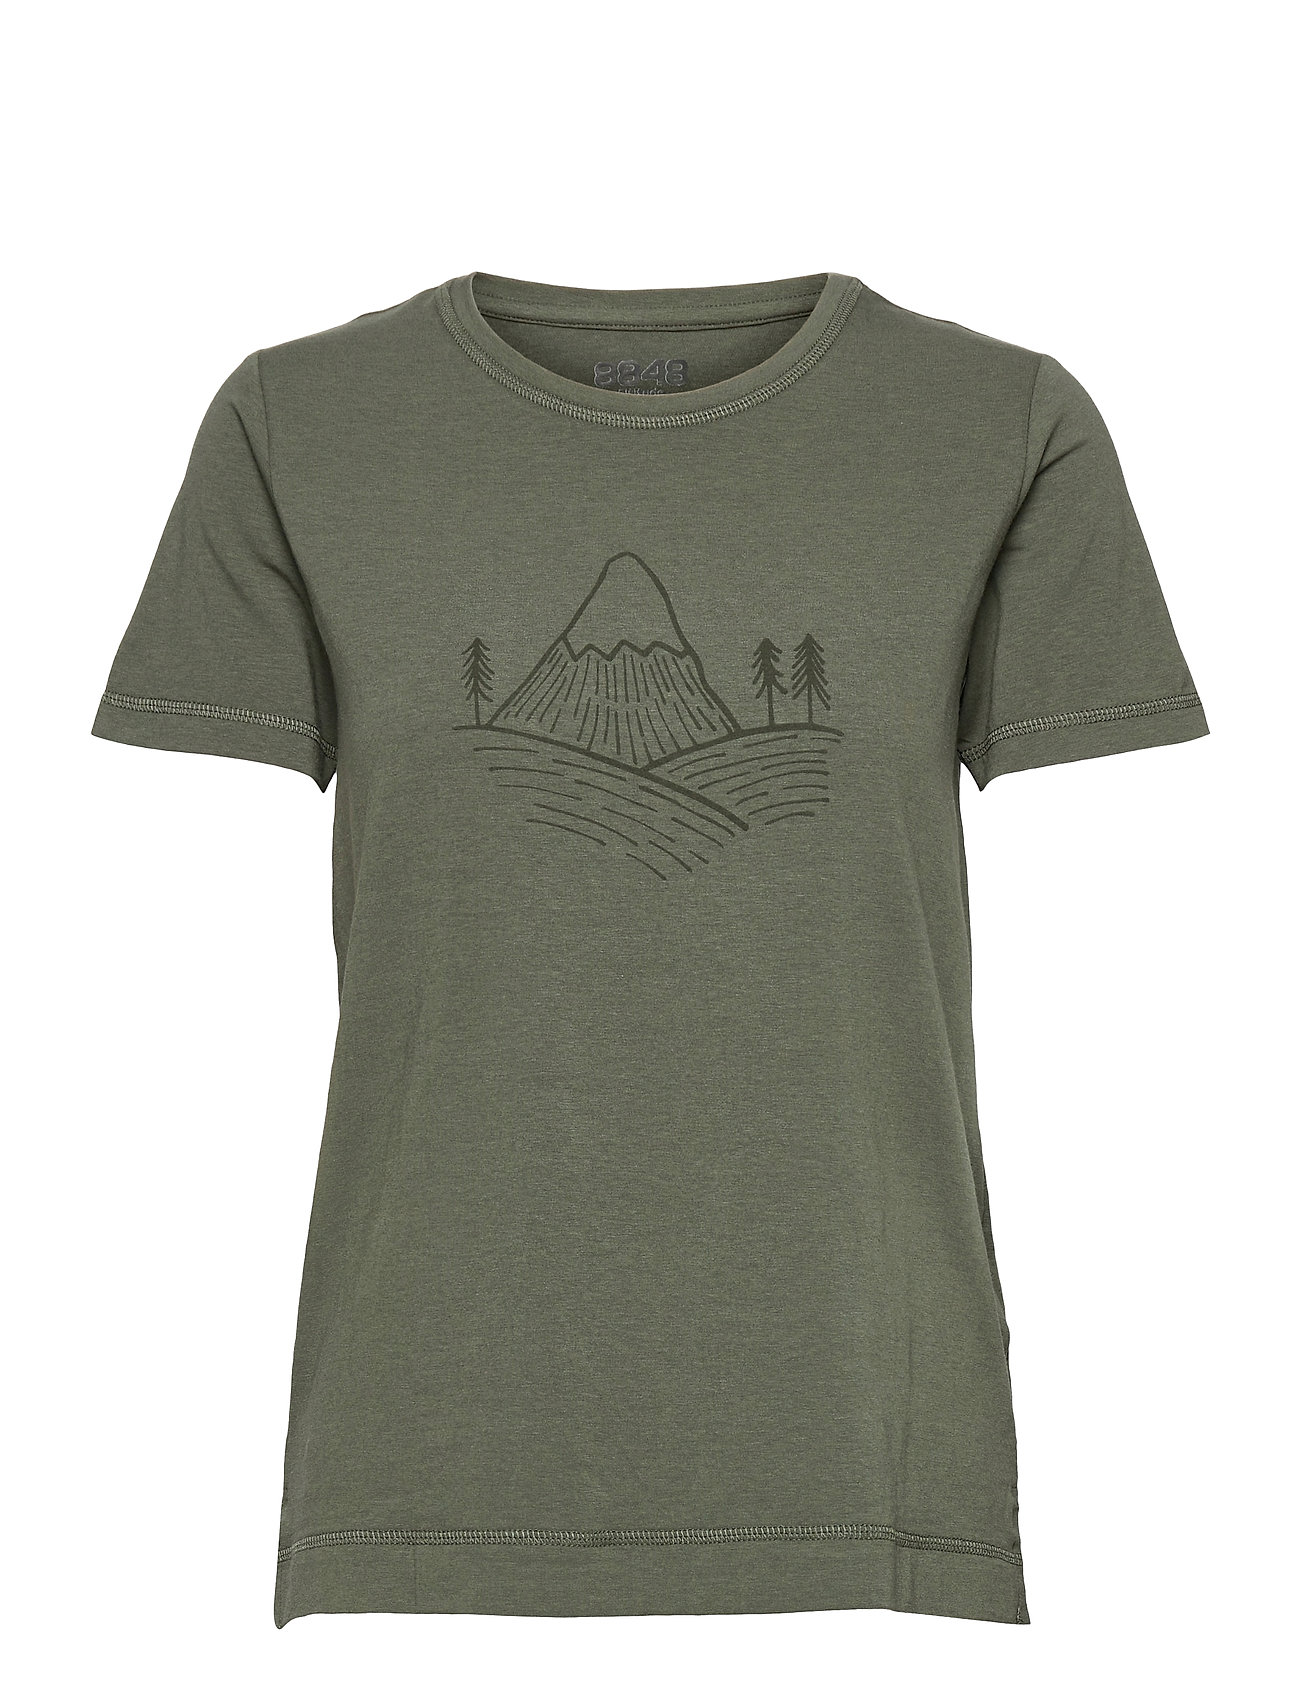 Leiria W Tee T-shirts & Tops Short-sleeved Vihreä 8848 Altitude